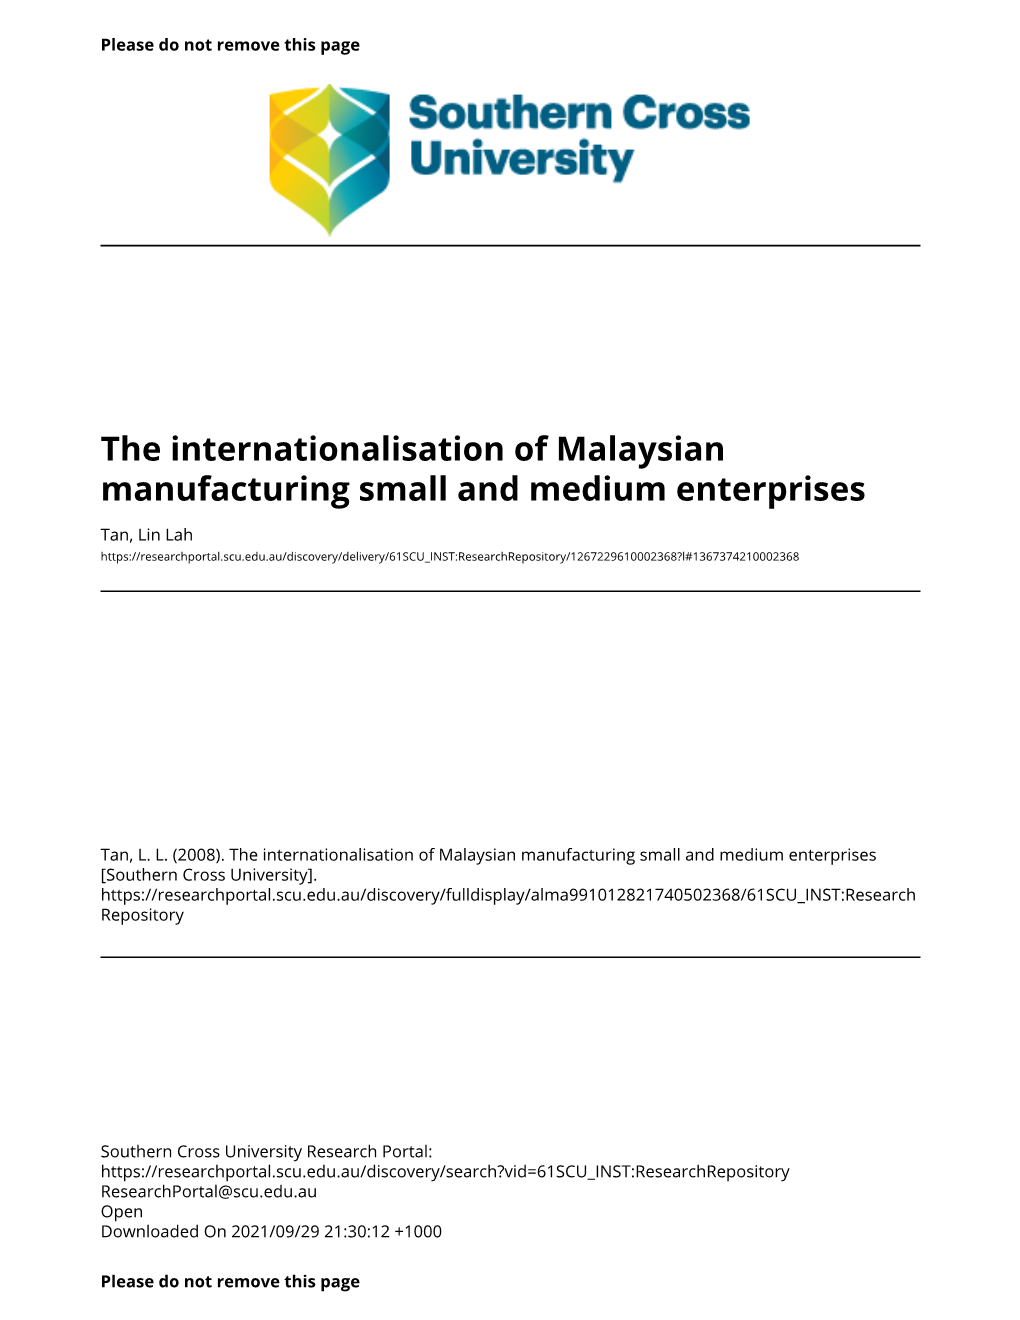 The Internationalisation of Malaysian Manufacturing Small and Medium Enterprises